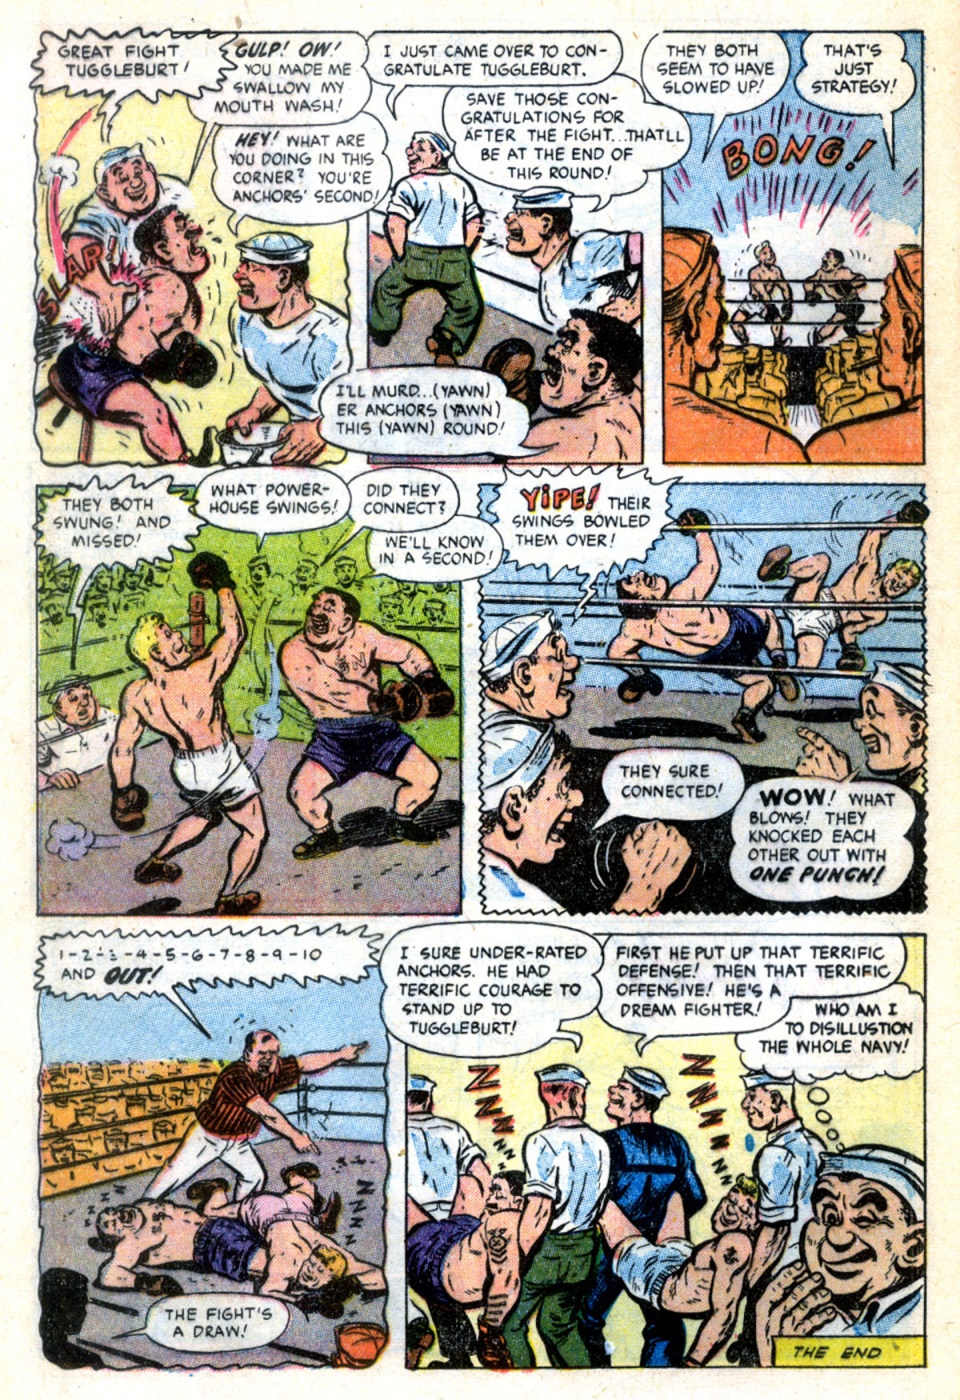 Anchors the Salt Water Daffy - Comics (16)